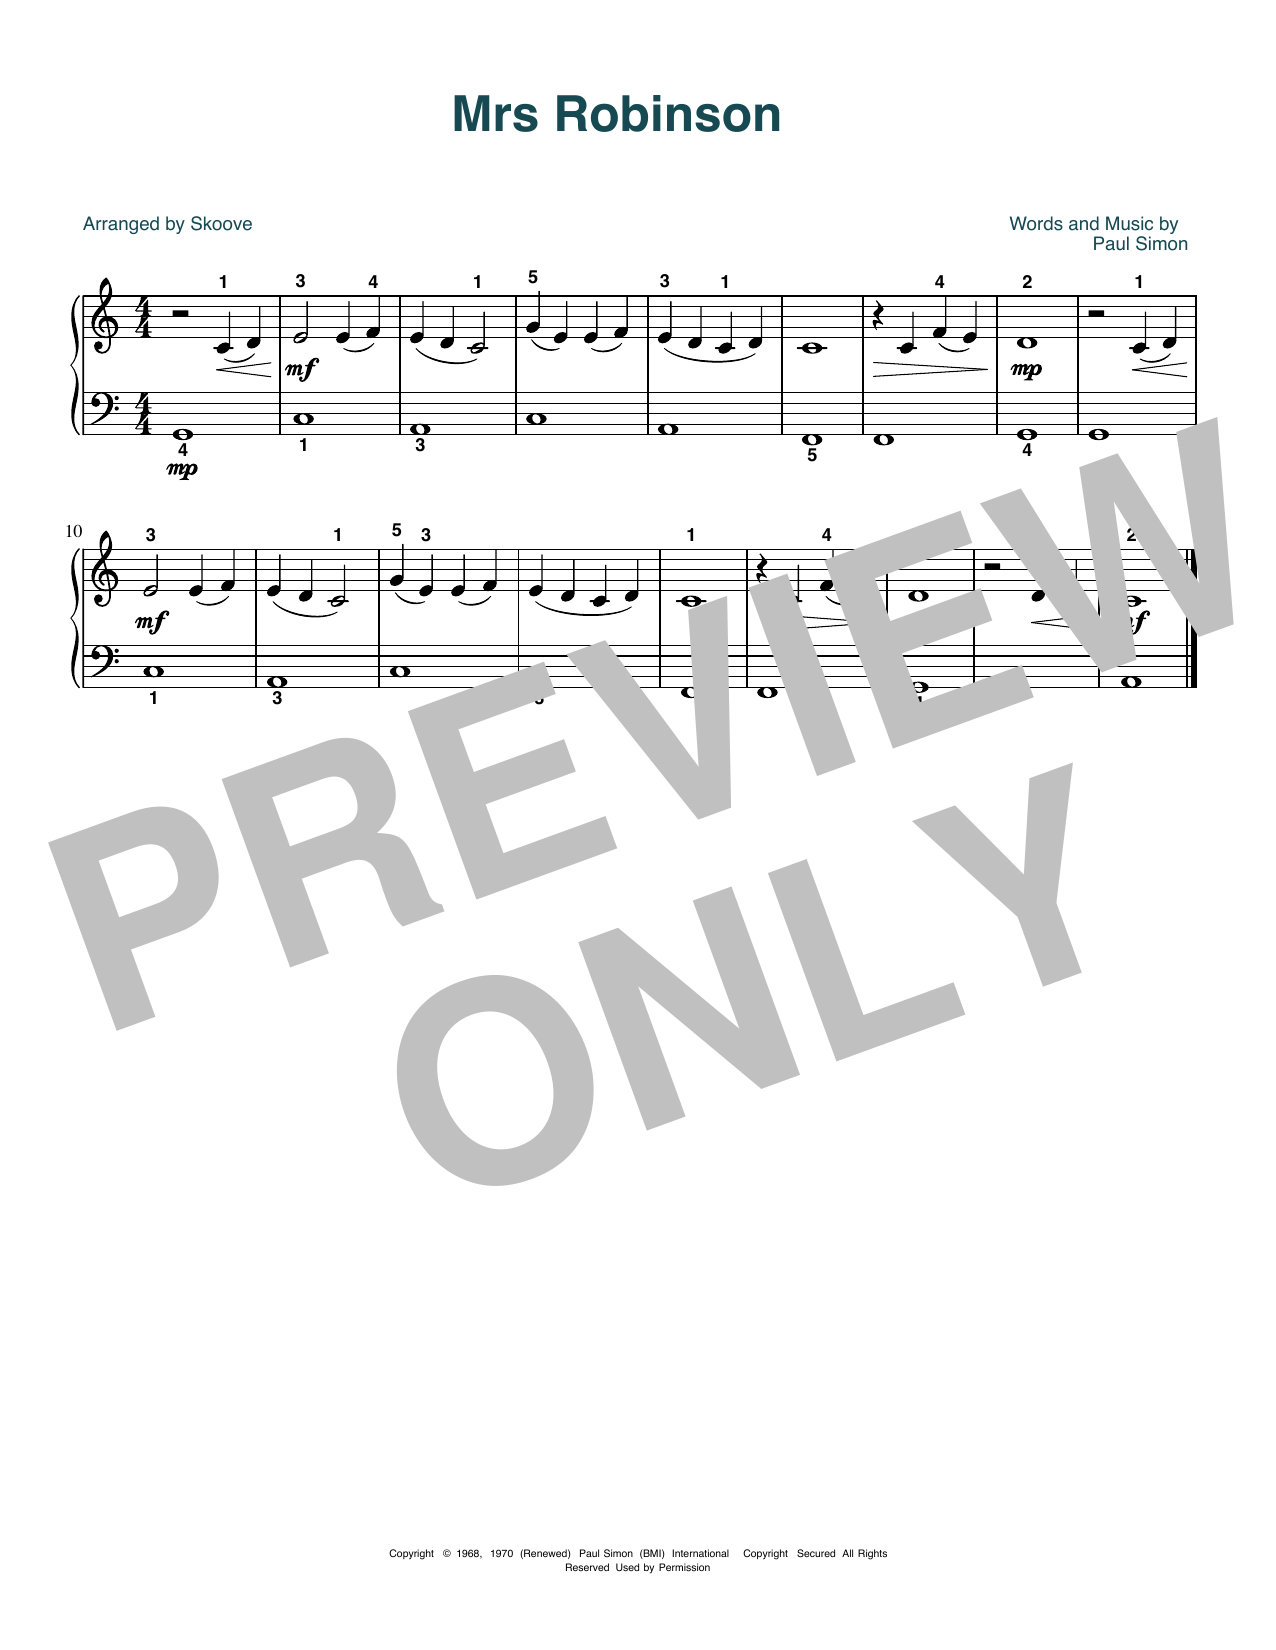 Simon & Garfunkel Mrs. Robinson (arr. Skoove) Sheet Music Notes & Chords for Beginner Piano (Abridged) - Download or Print PDF